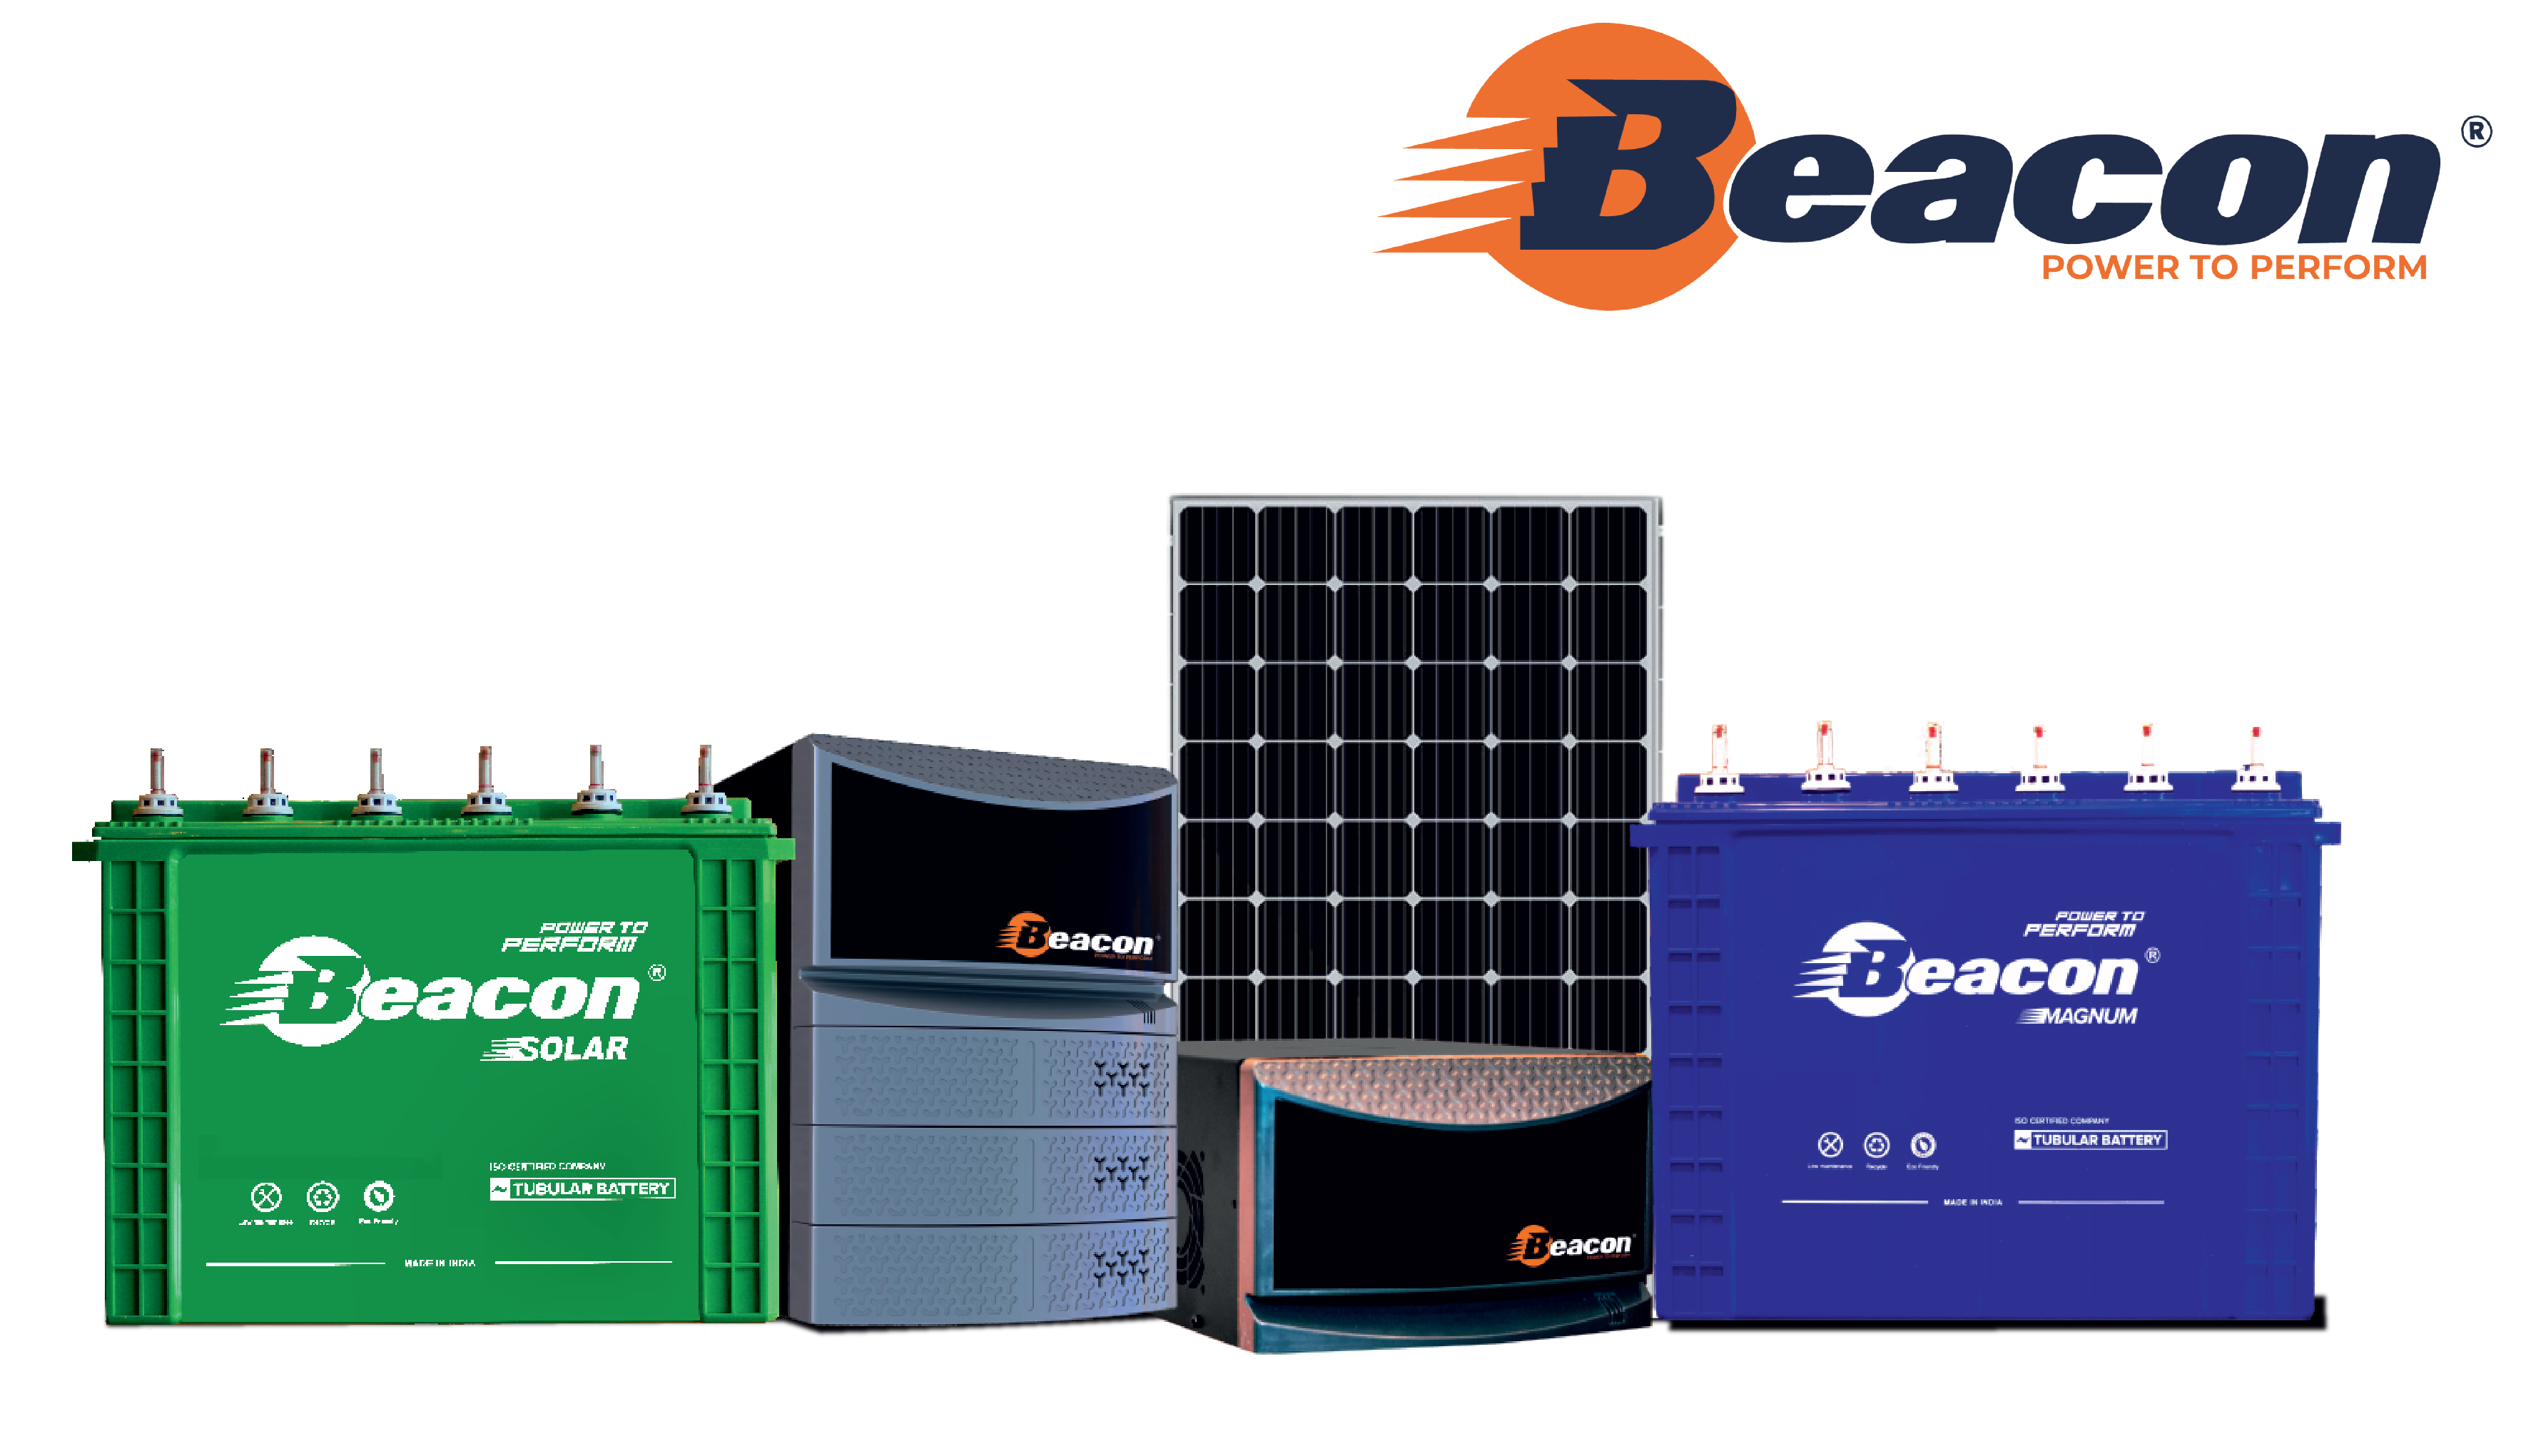 Beacon Energy Storage Systems